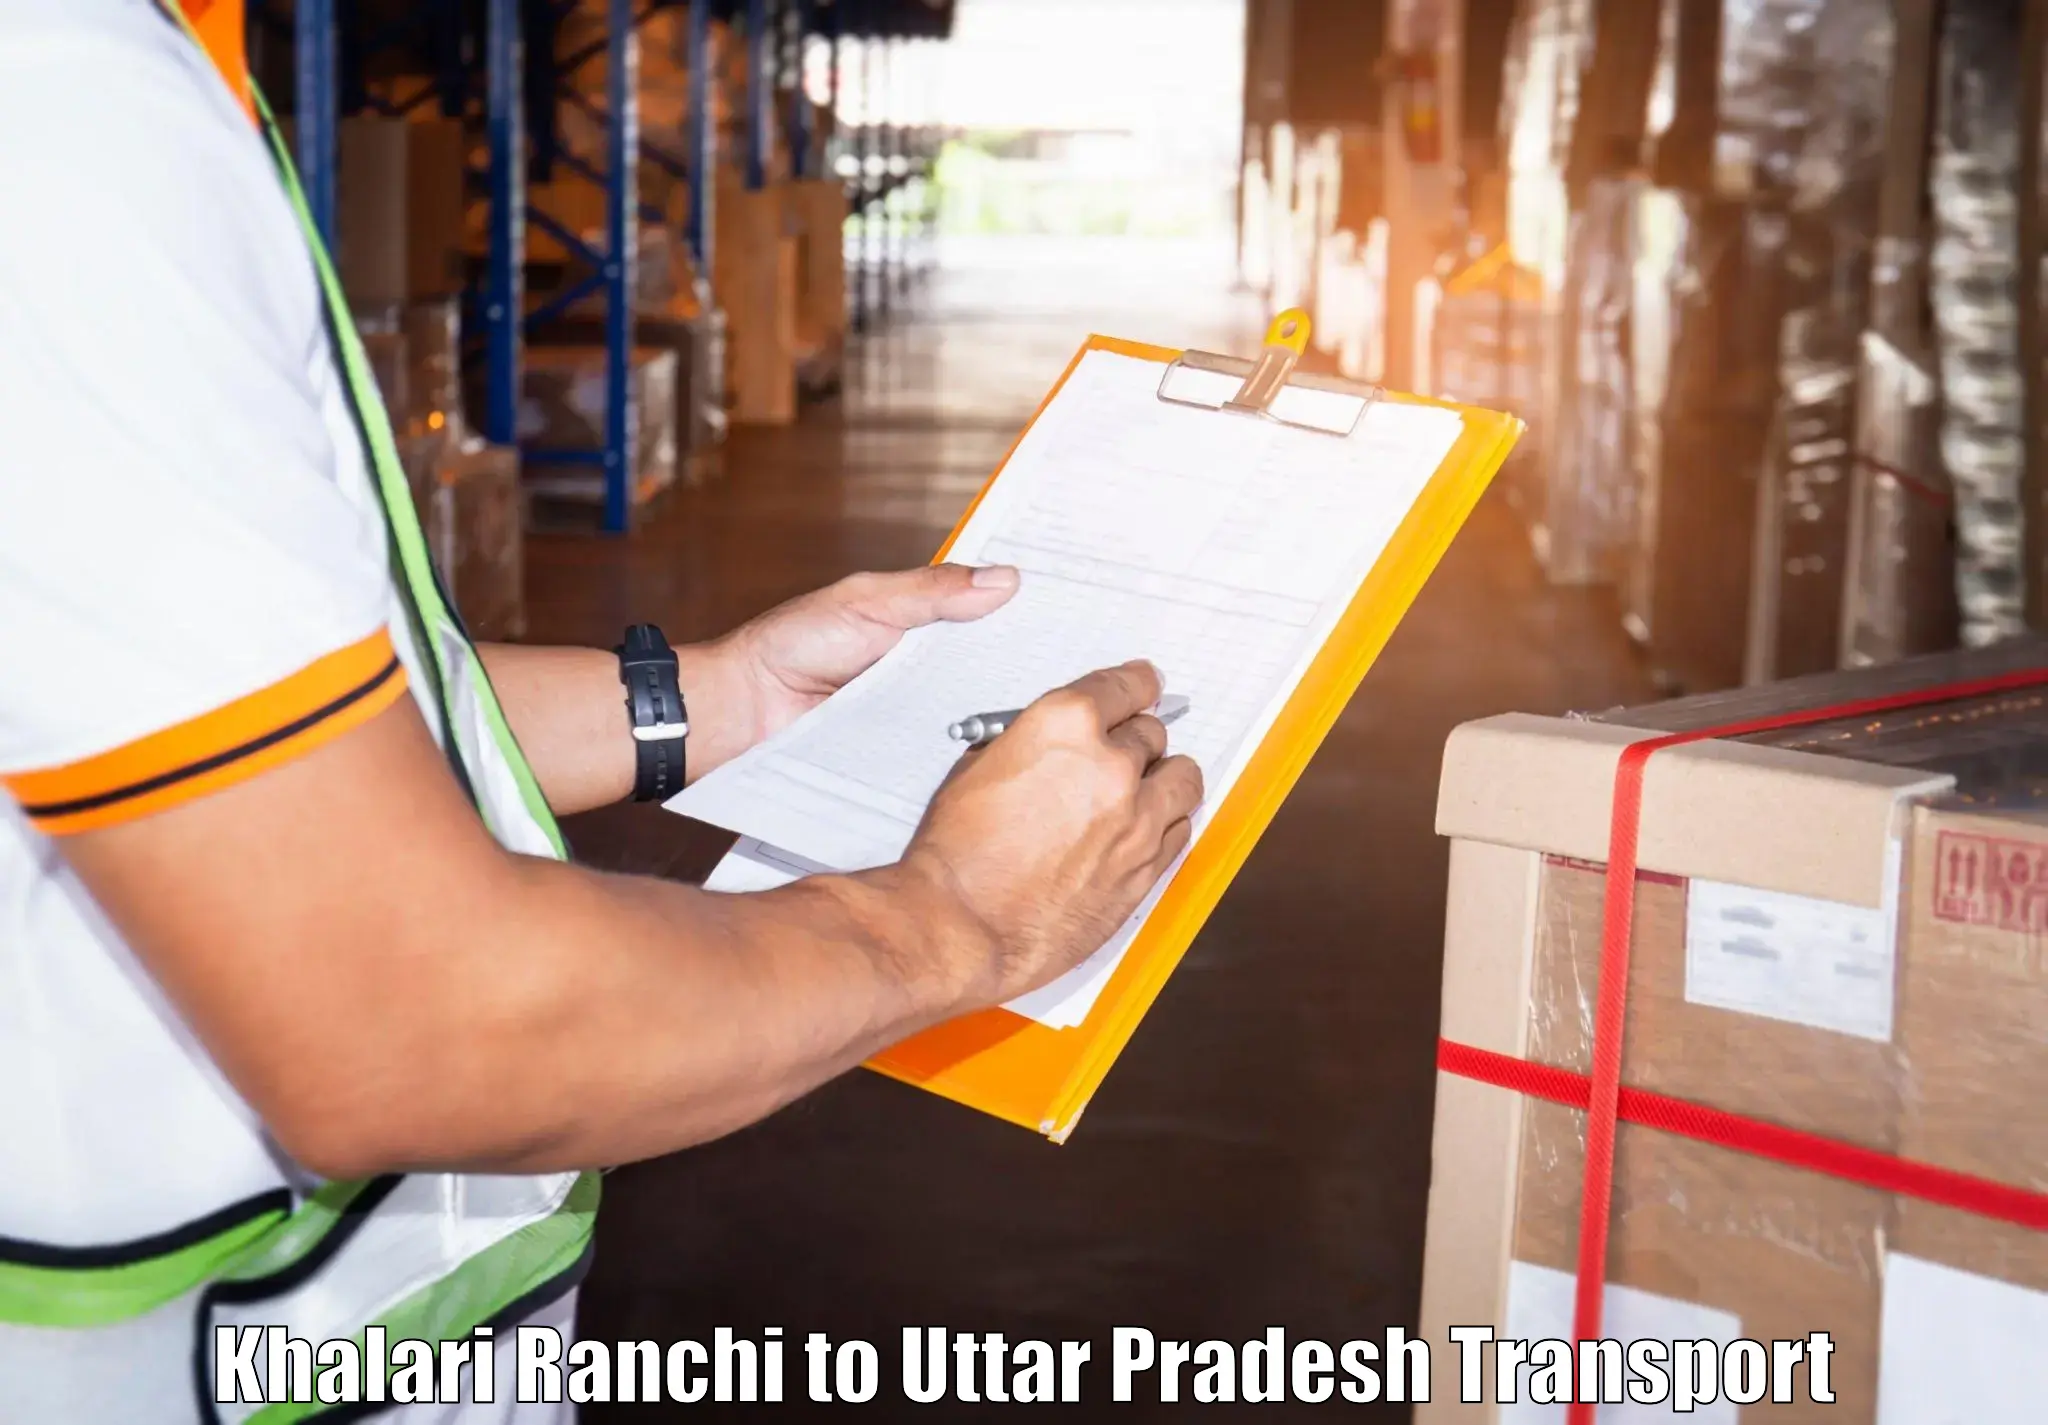 Truck transport companies in India Khalari Ranchi to Chiraiyakot